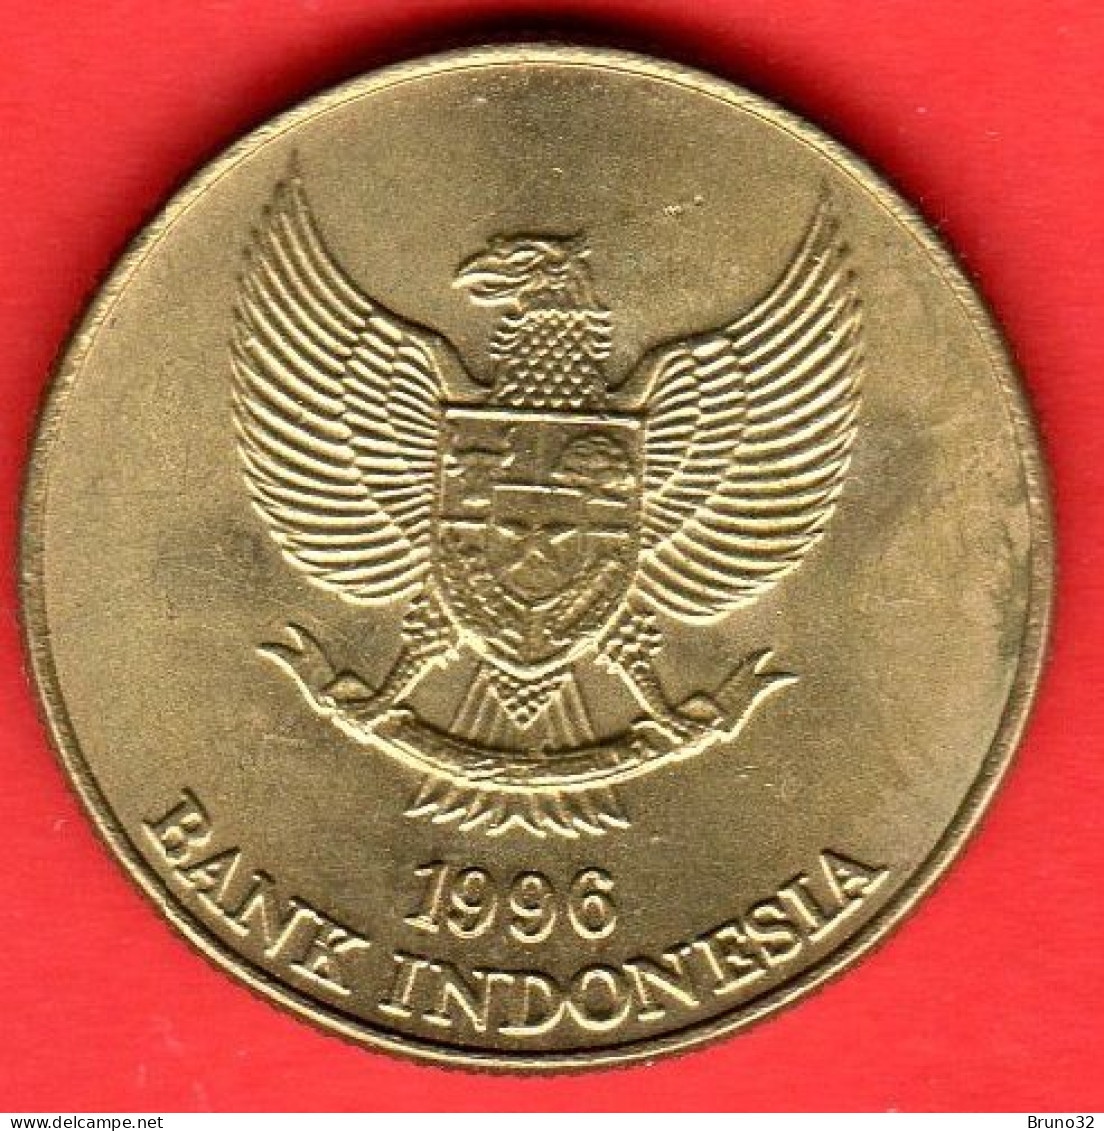 Indonesia - 1996 - 50 Rupiah - Dragon - QFDC/aUNC - Come Da Foto - Indonesia